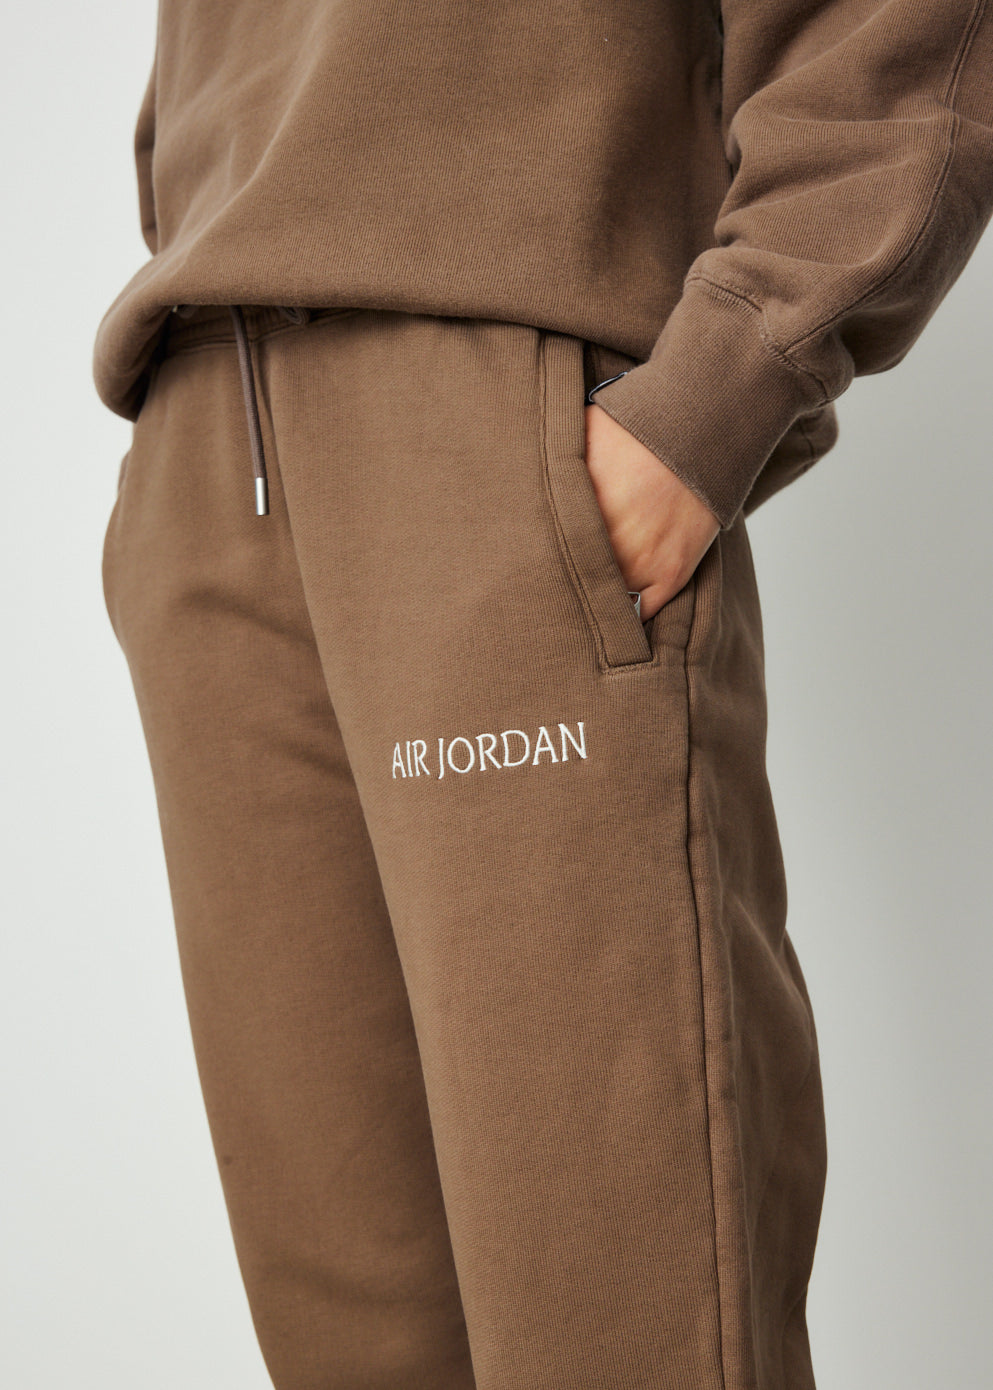 Women's Air Jordan Fleece Pants